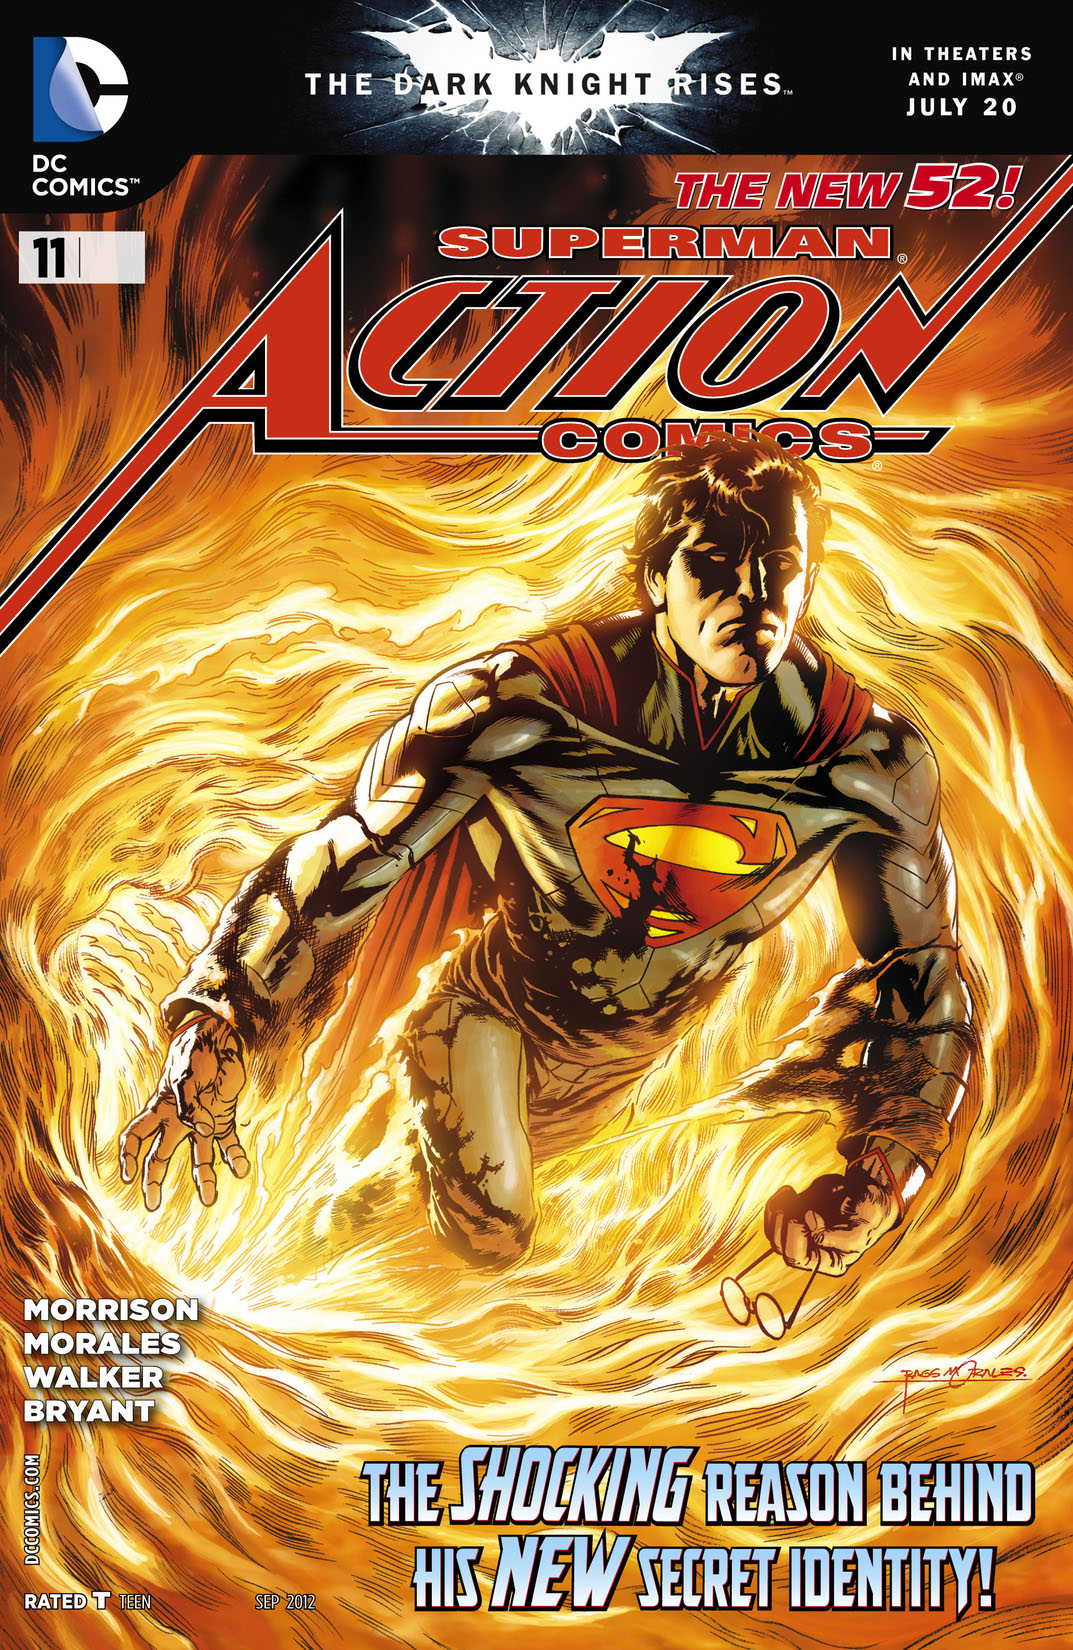 Action Comics (2011-) #11 preview images